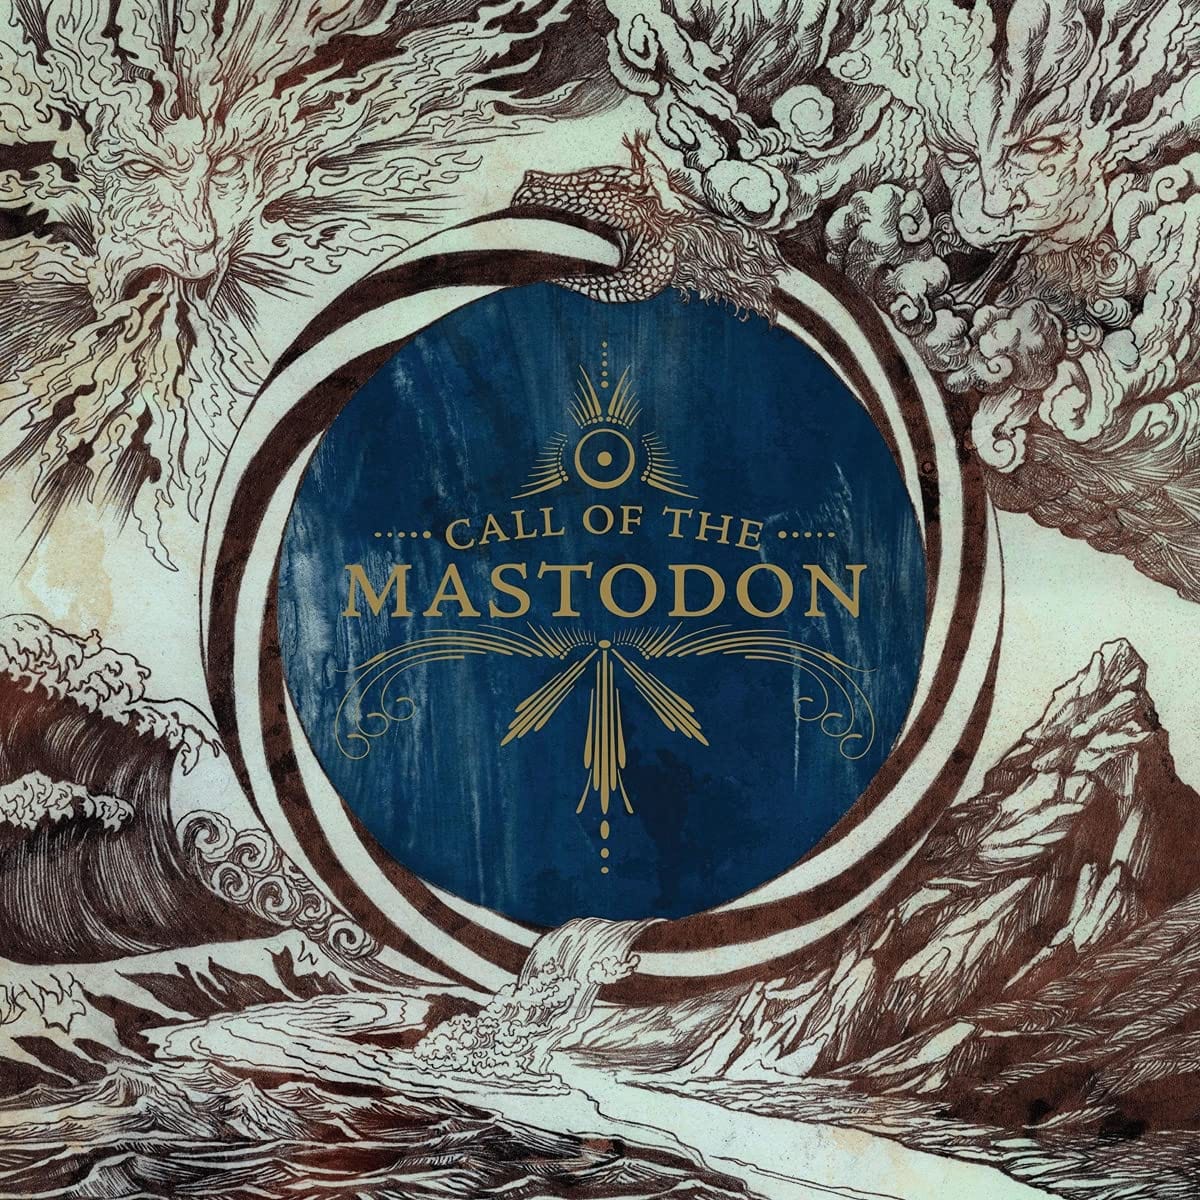 Mastodon - Call of the Mastodon (Colored Vinyl, White, Black, Blue, Gold) - Third Eye